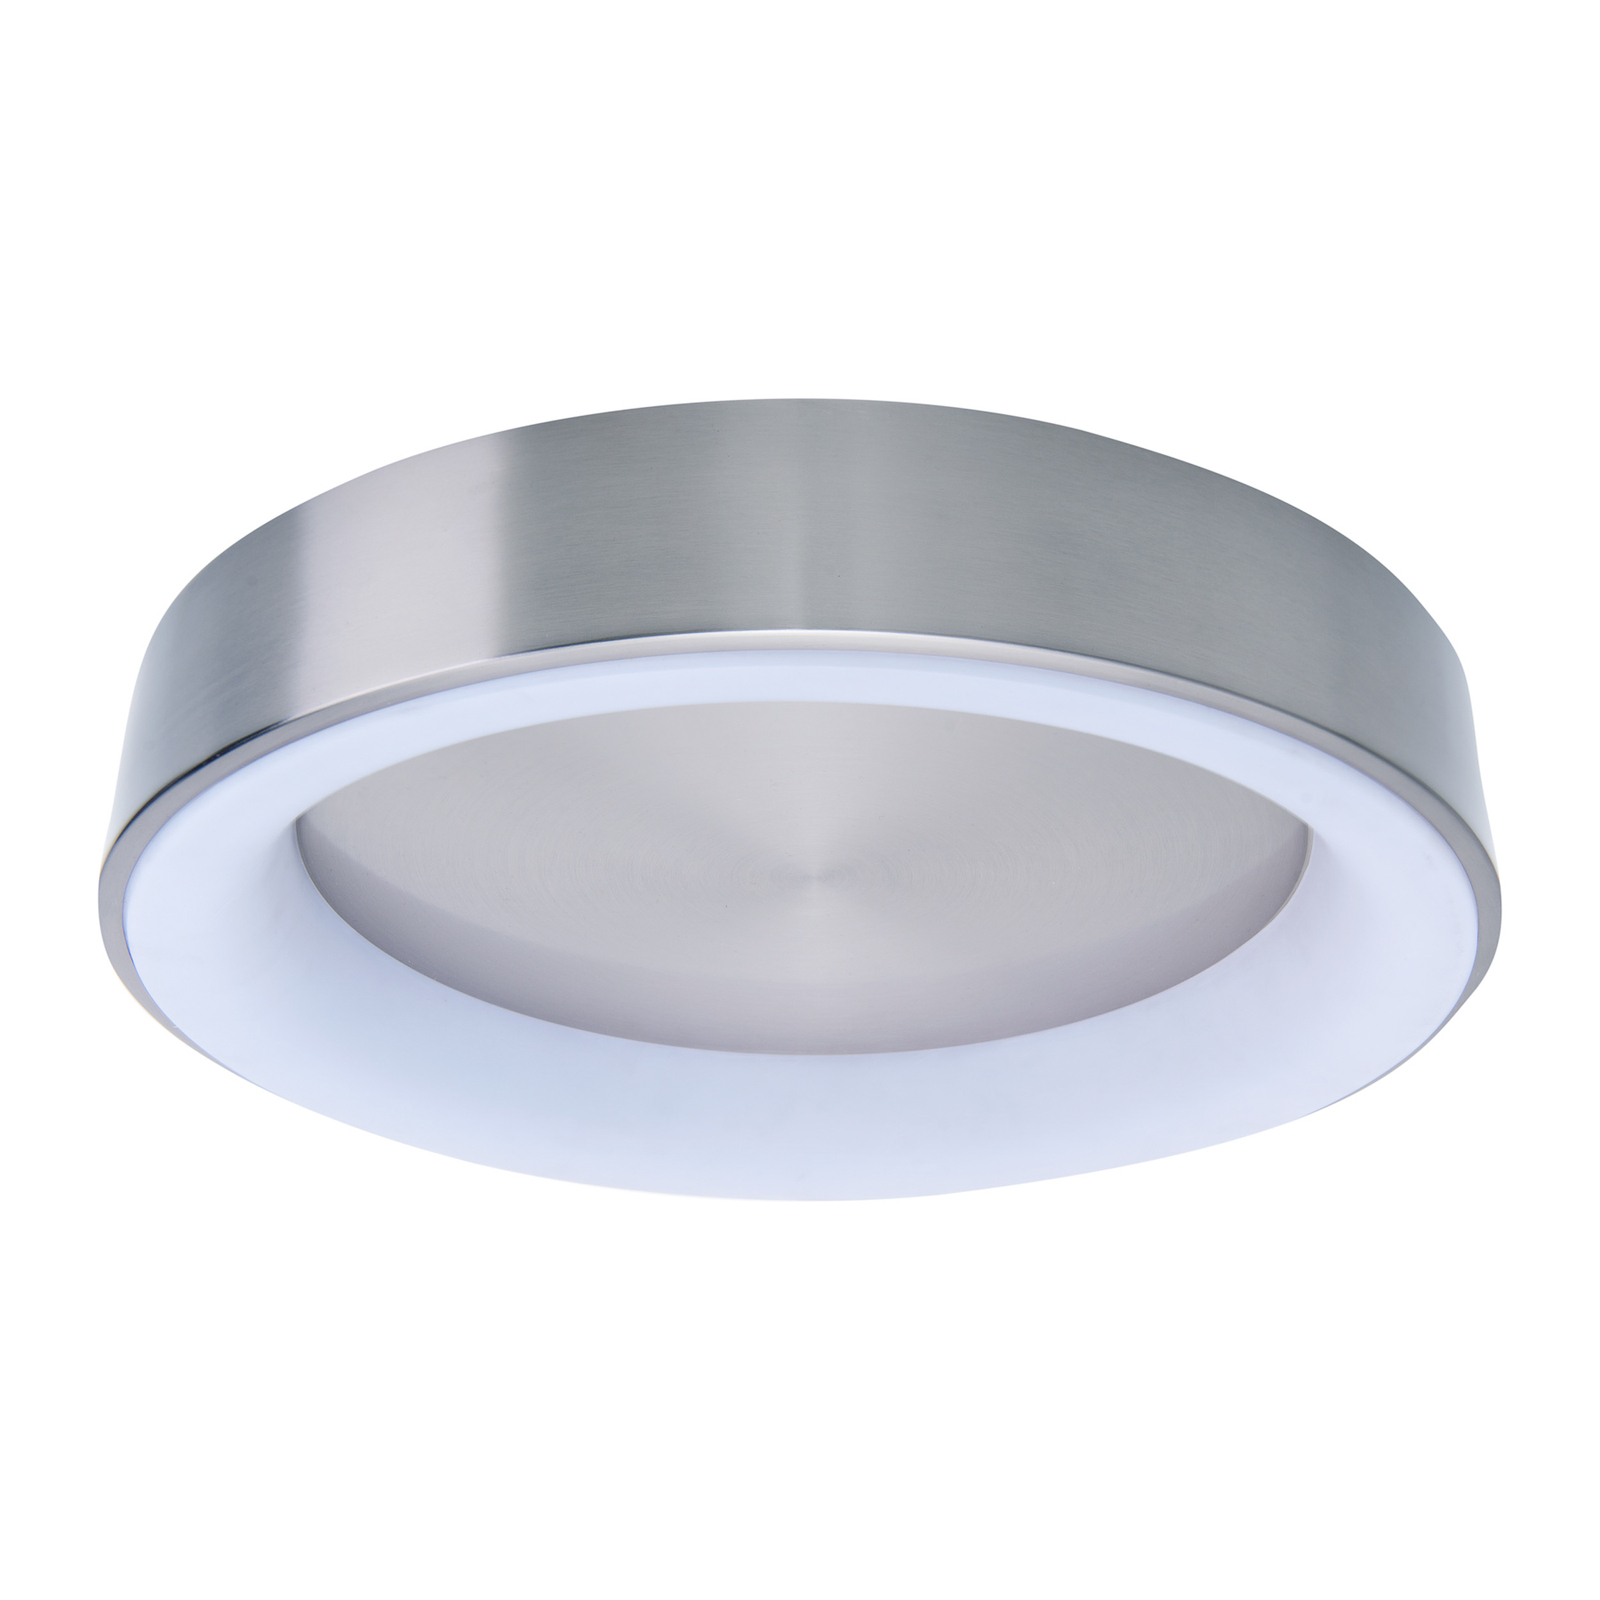 LED plafondlamp 1386961, RGBW, afstandsbediening